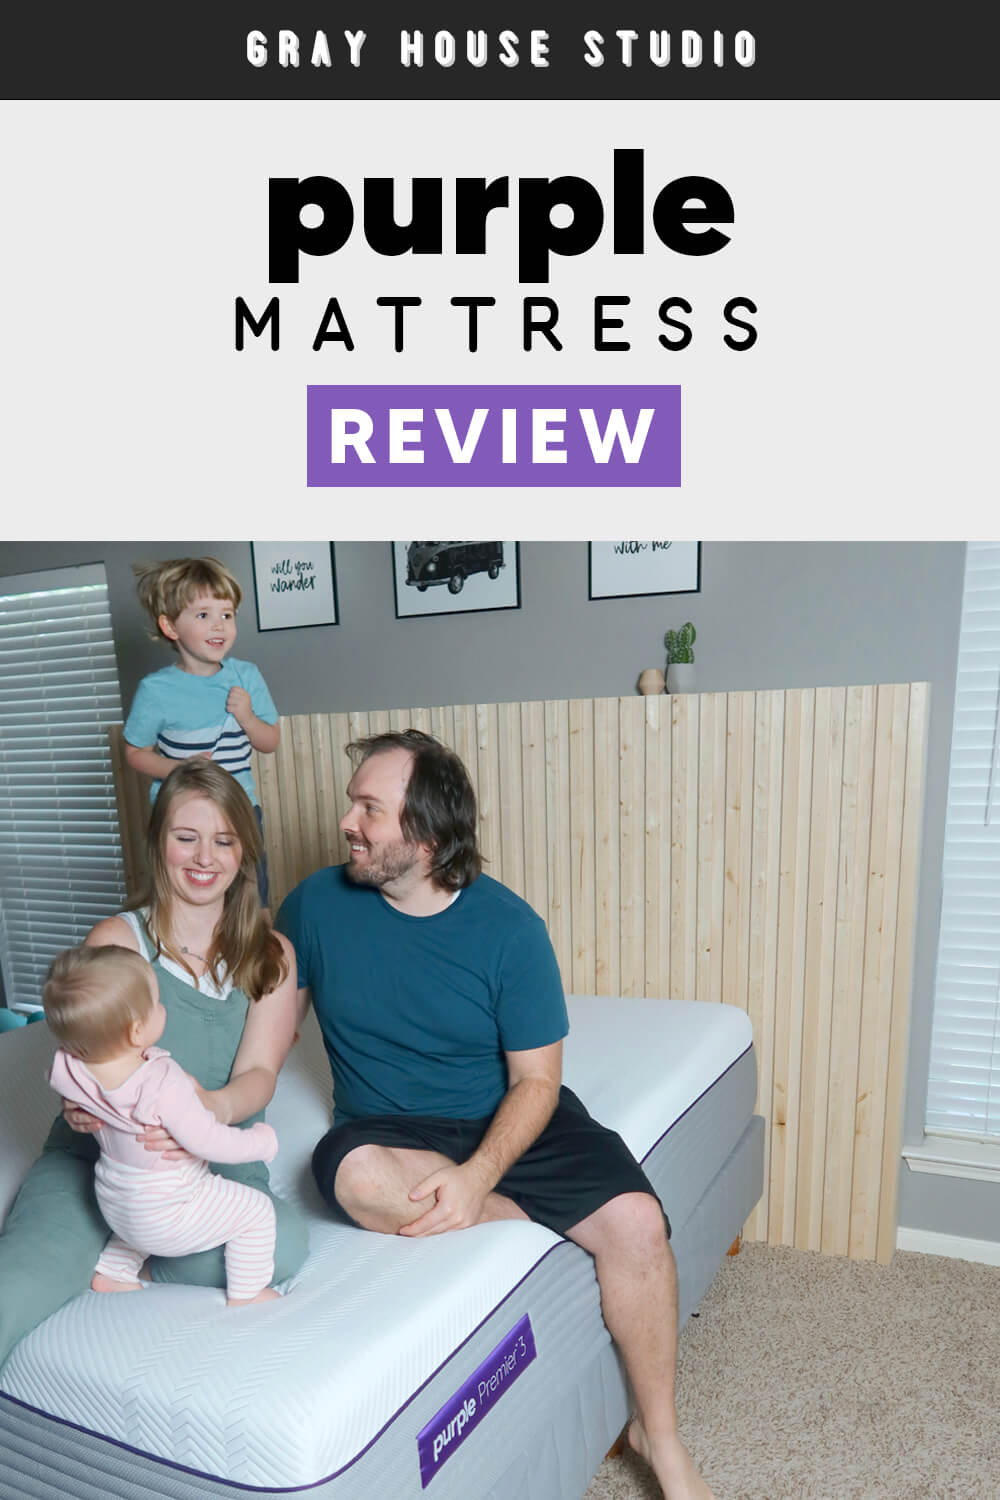 Review of a Purple Mattress. Is the Hybrid Premier Purple Mattress worth it?